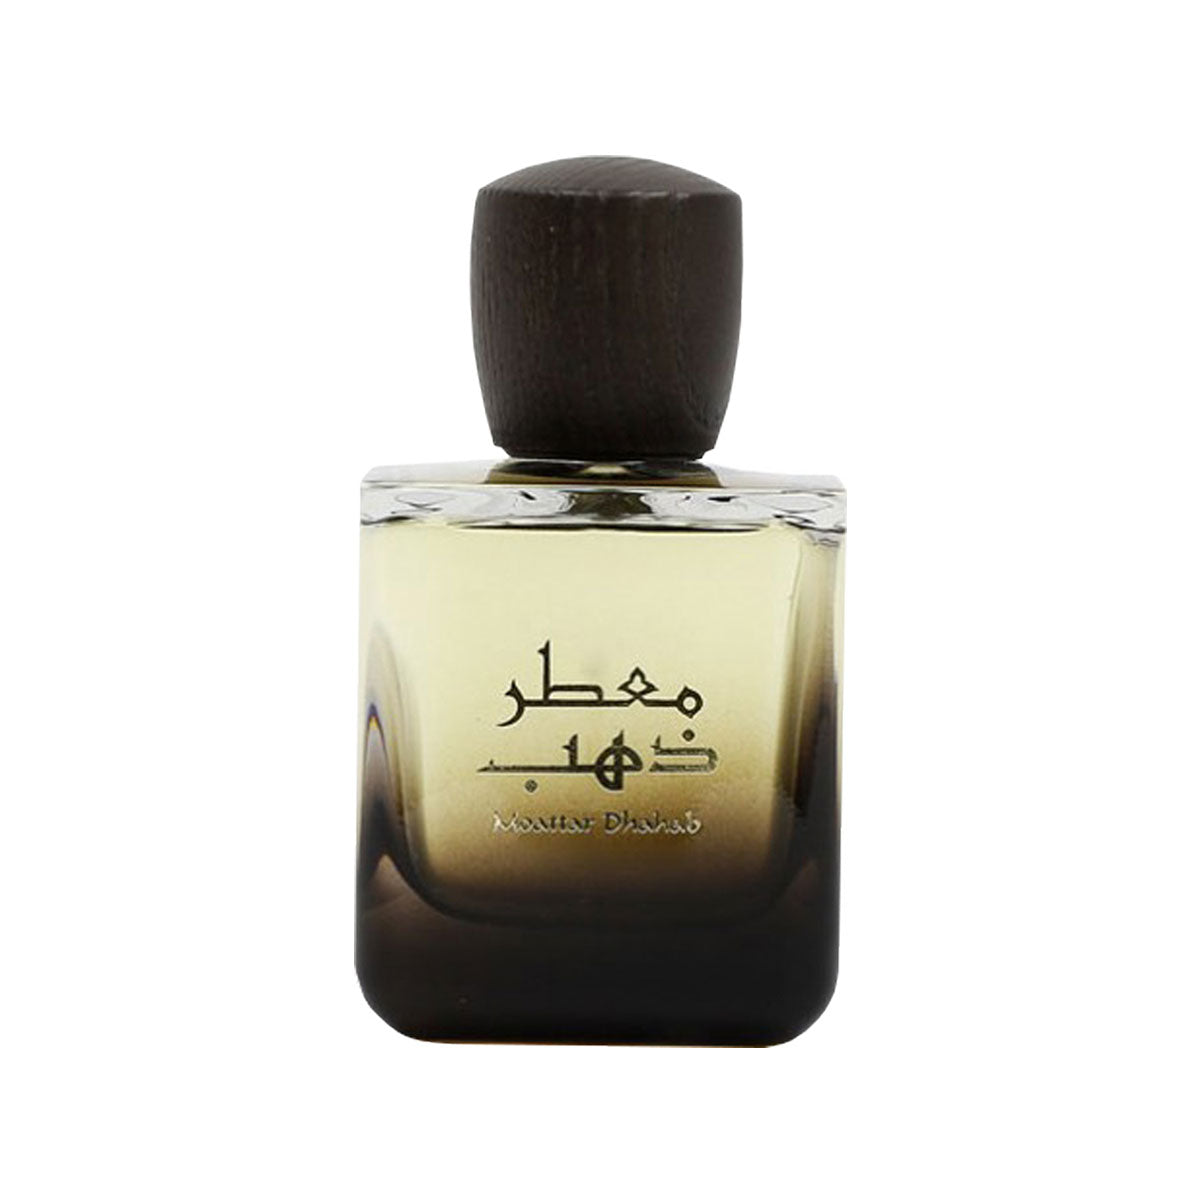 Buy Marshoud Mini Perfume Set No.4 - 3pcs Online in Iraq